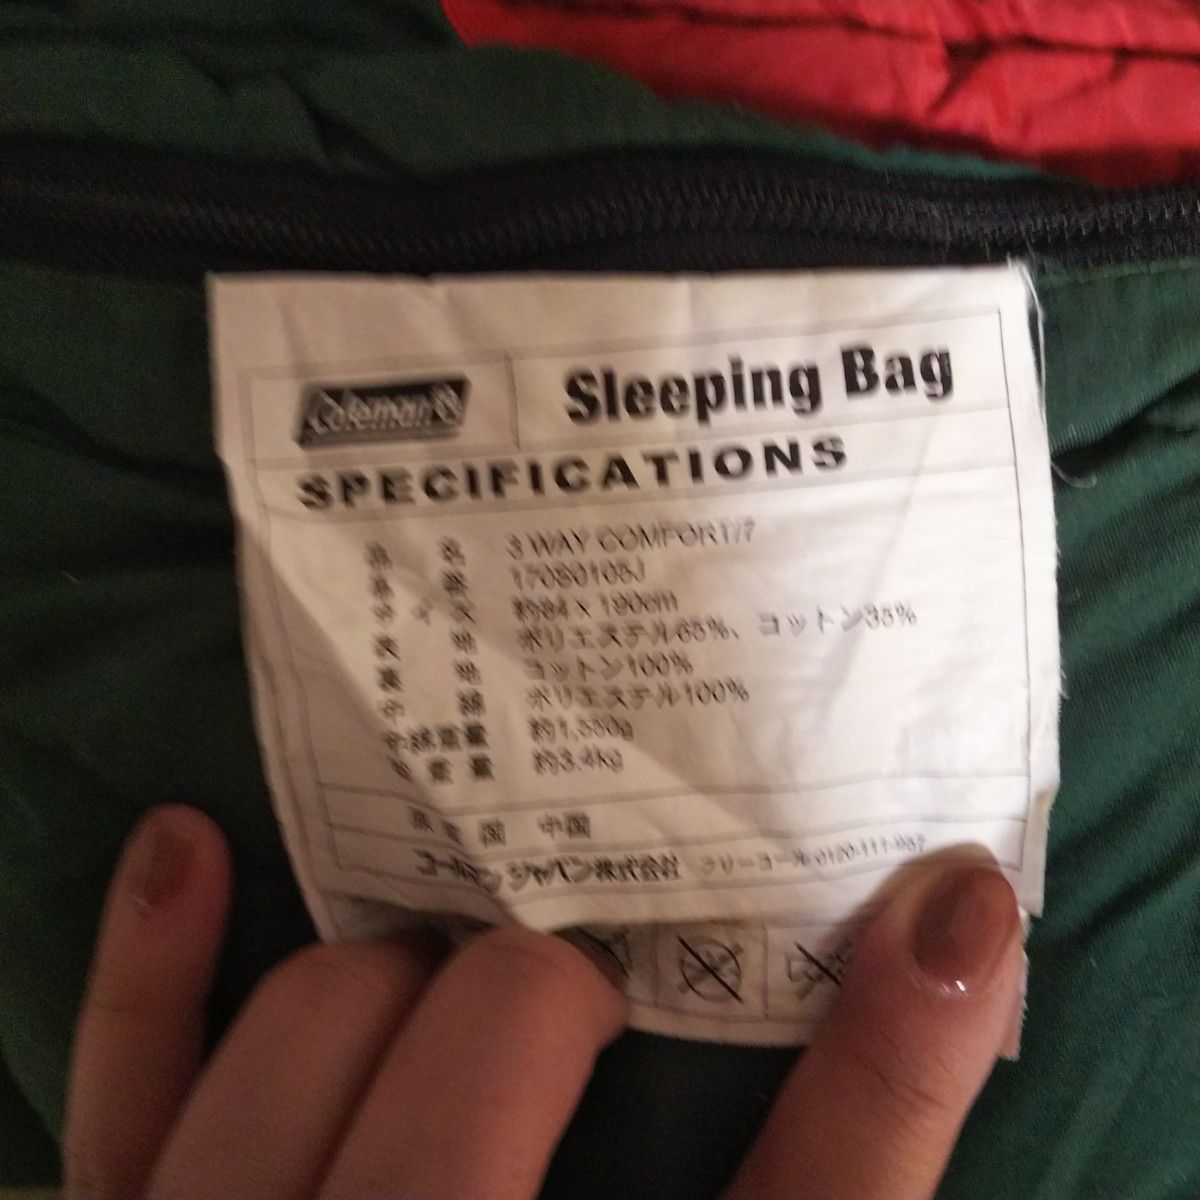 Coleman コールマン Sleeping Bag 枕つき3WAY COMFORT/7 170S0105J